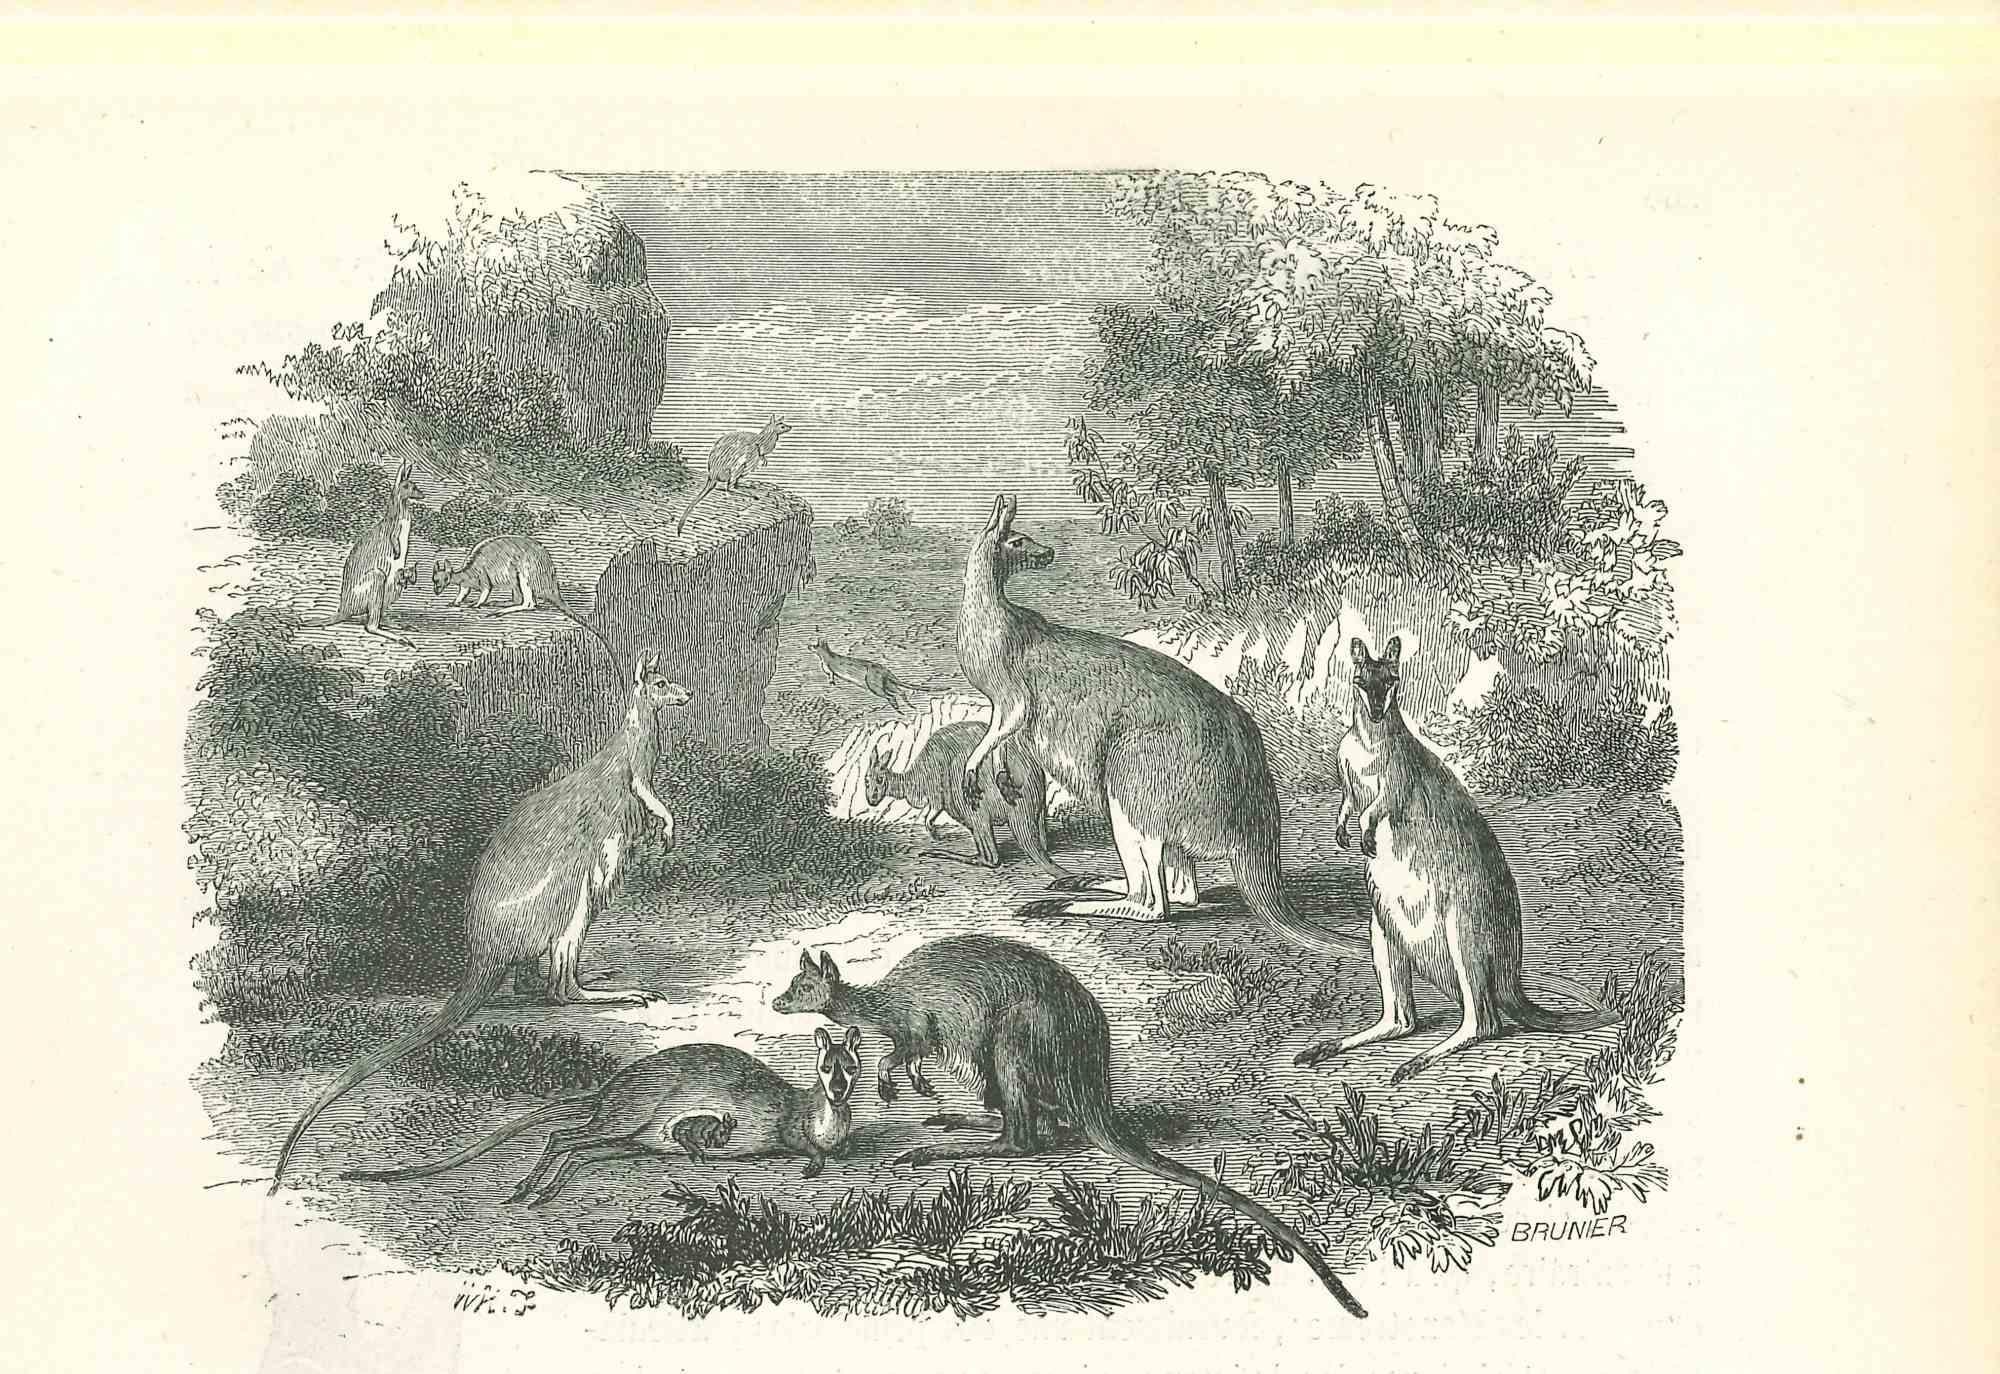 The Kangaroos - Original Lithograph by Paul Gervais - 1854